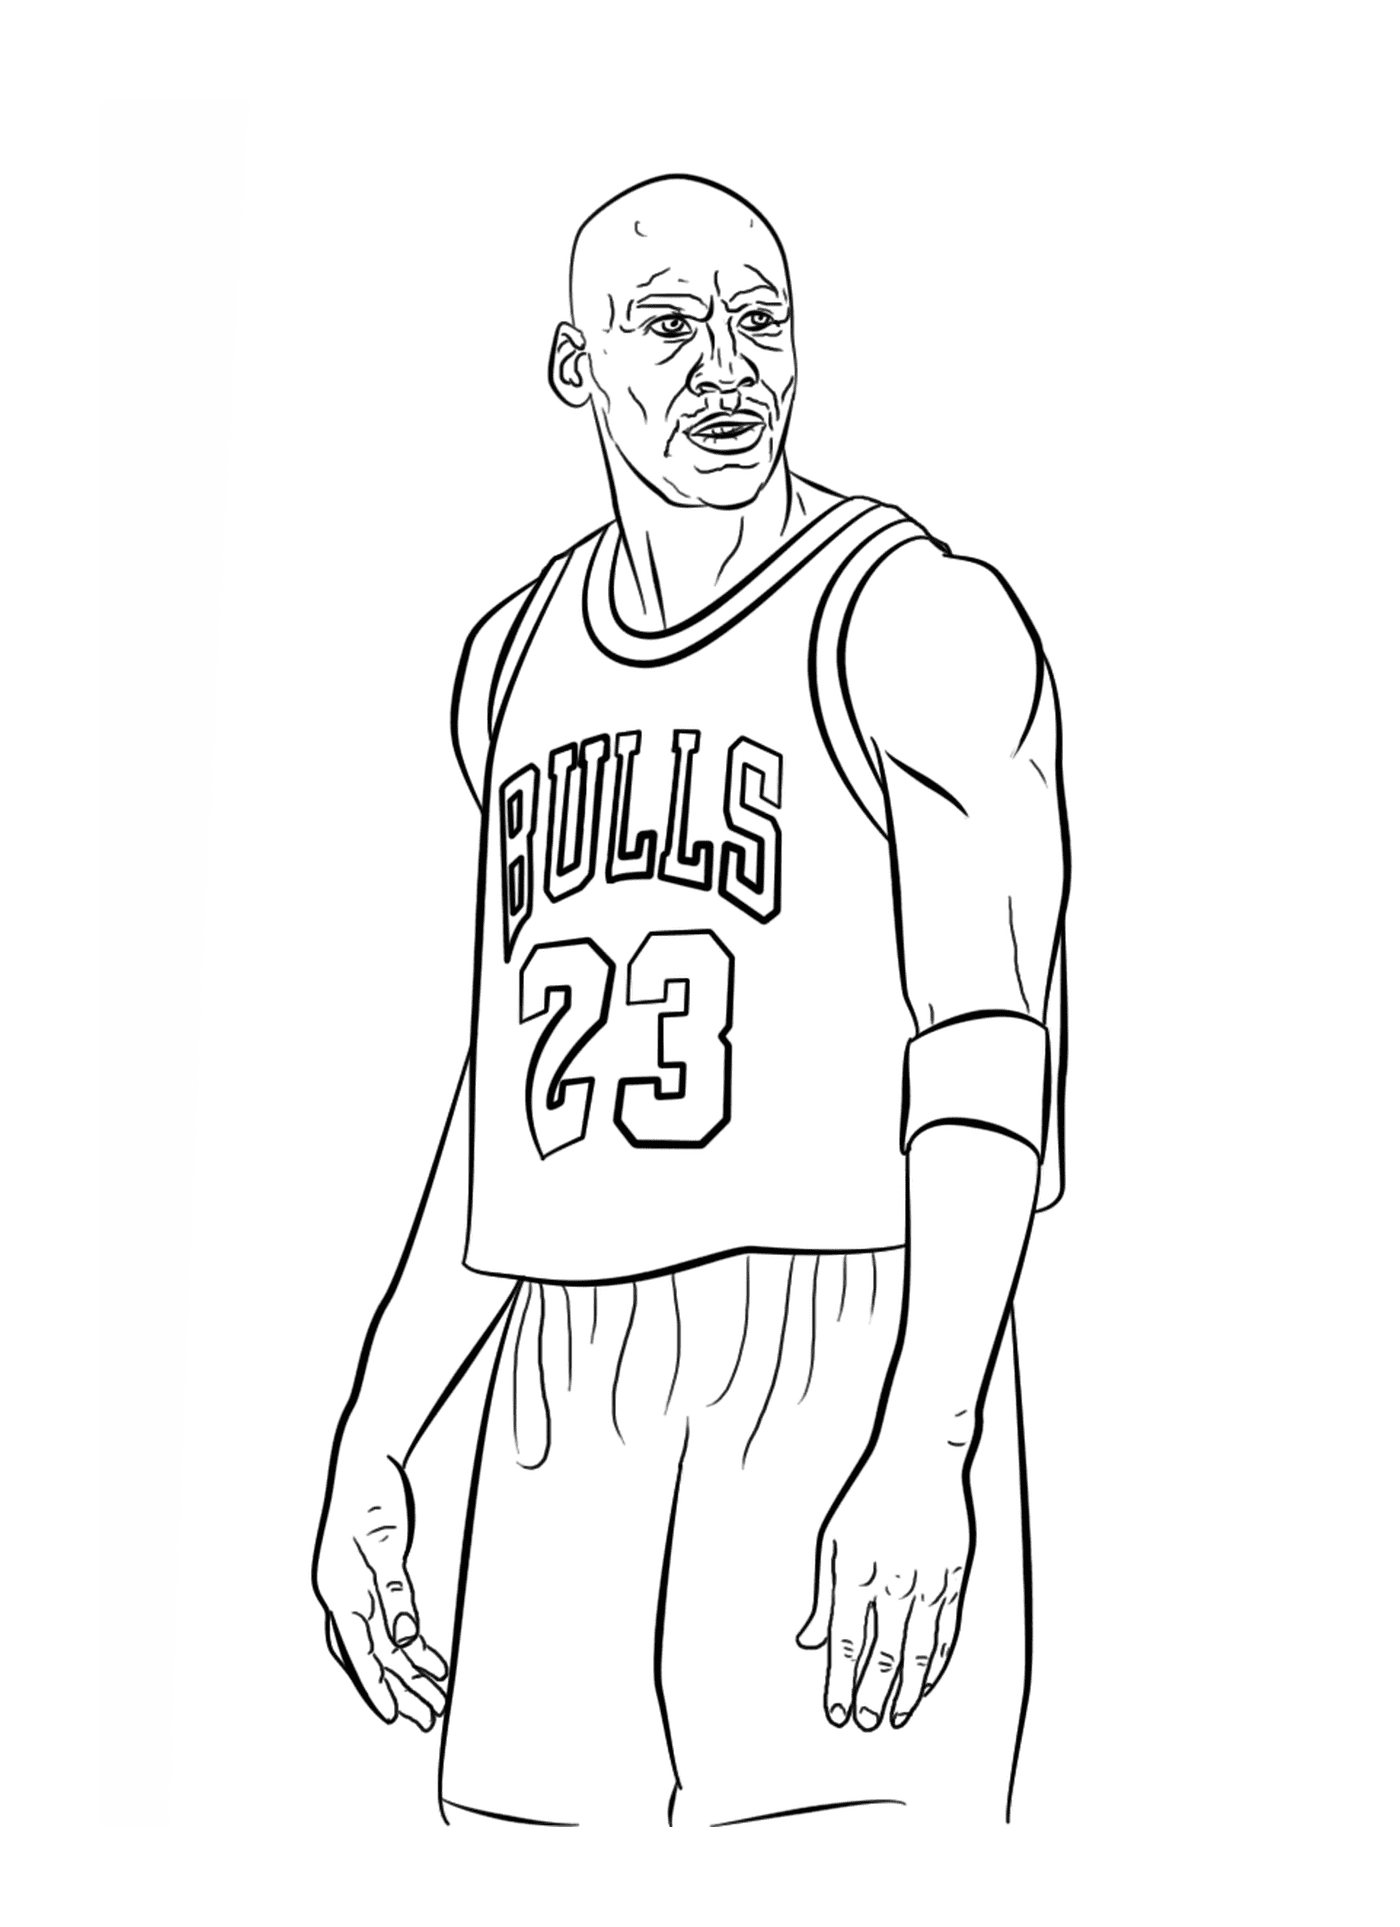  Michael Jordan, jugador de baloncesto de la NBA 